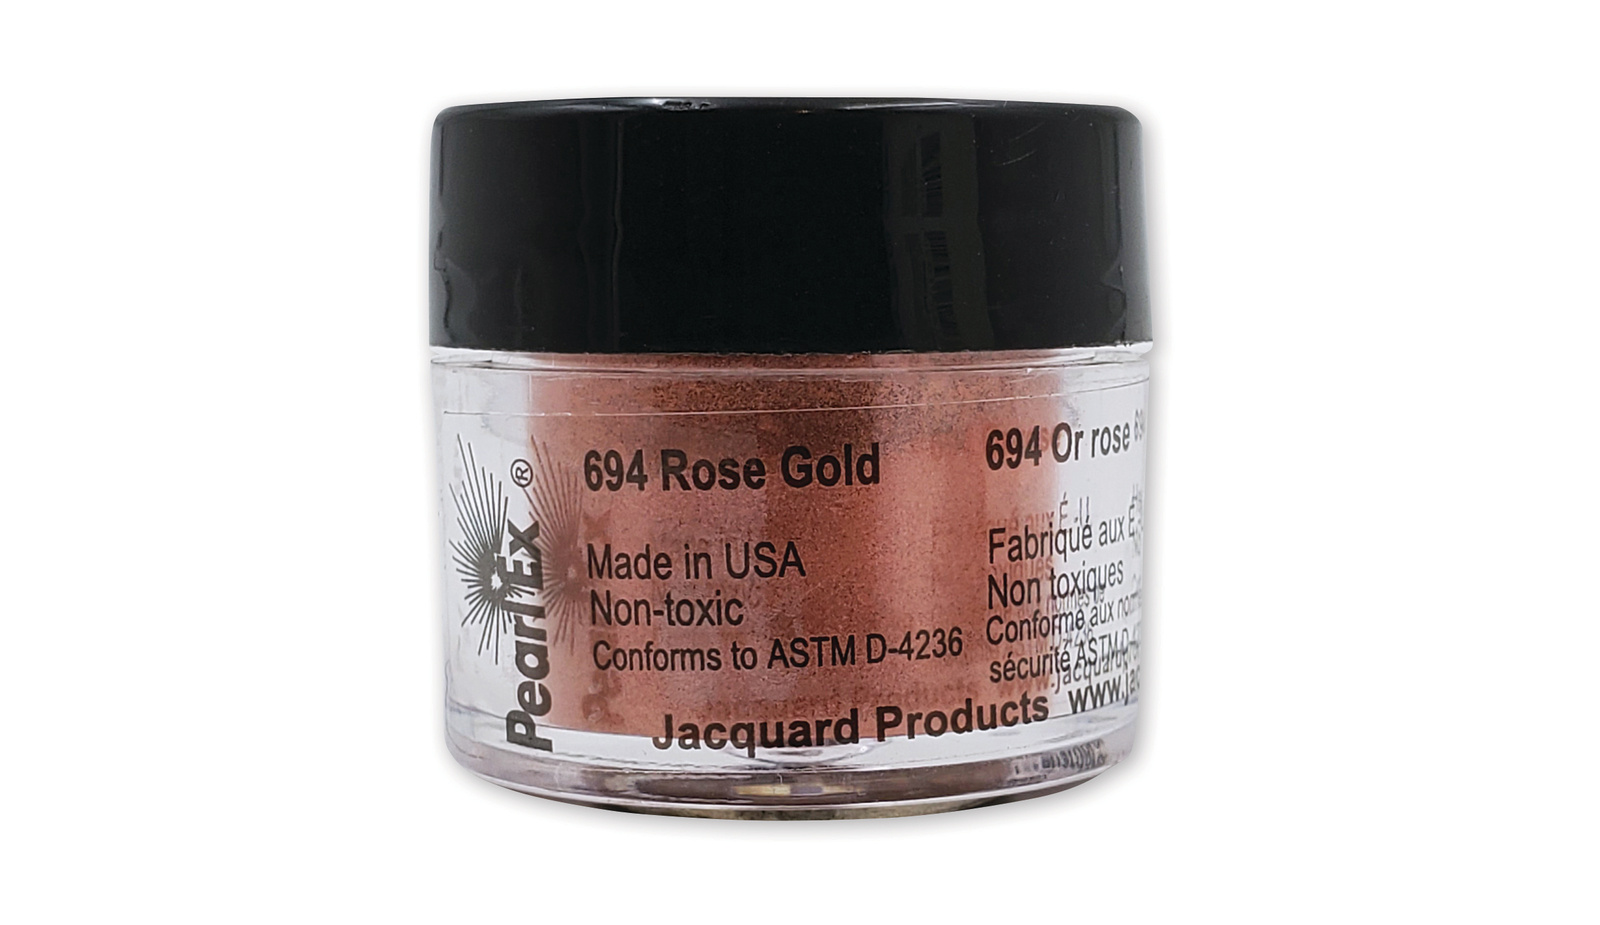 Jacquard Pearl Ex Powdered Pigments, 3g Jar, Rose Gold